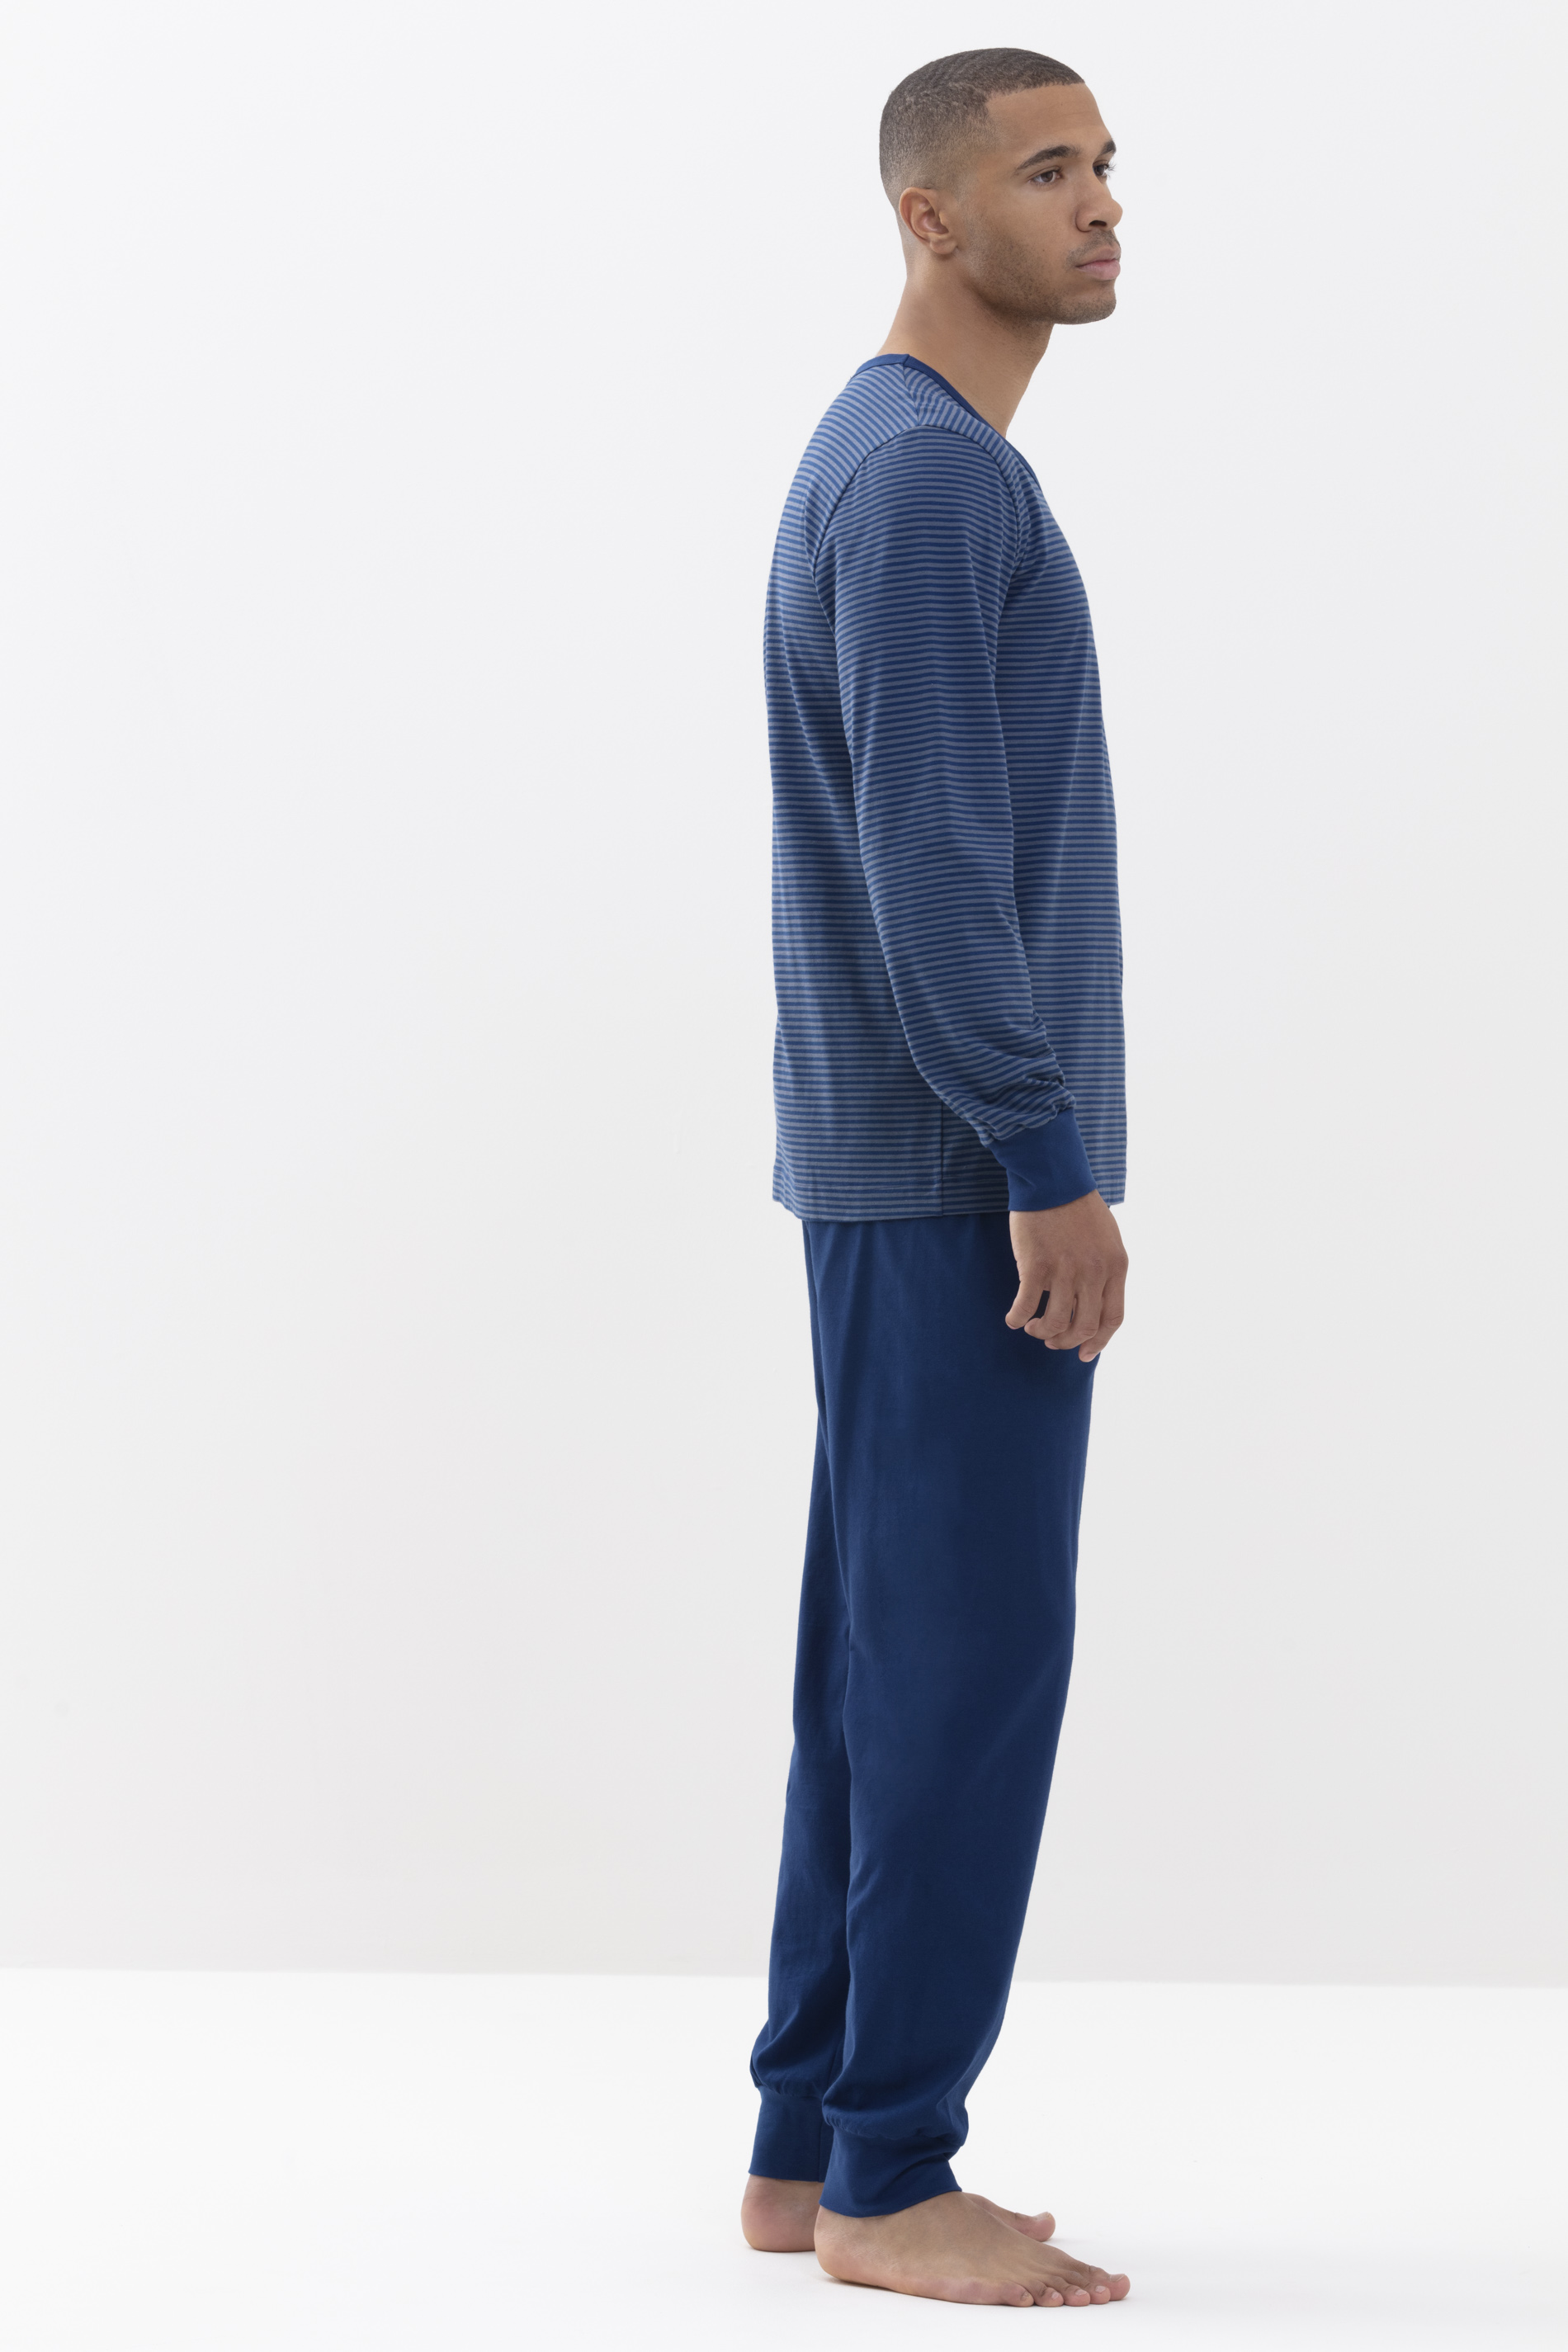 Pyjama Neptune Serie Cardwell Detailweergave 02 | mey®